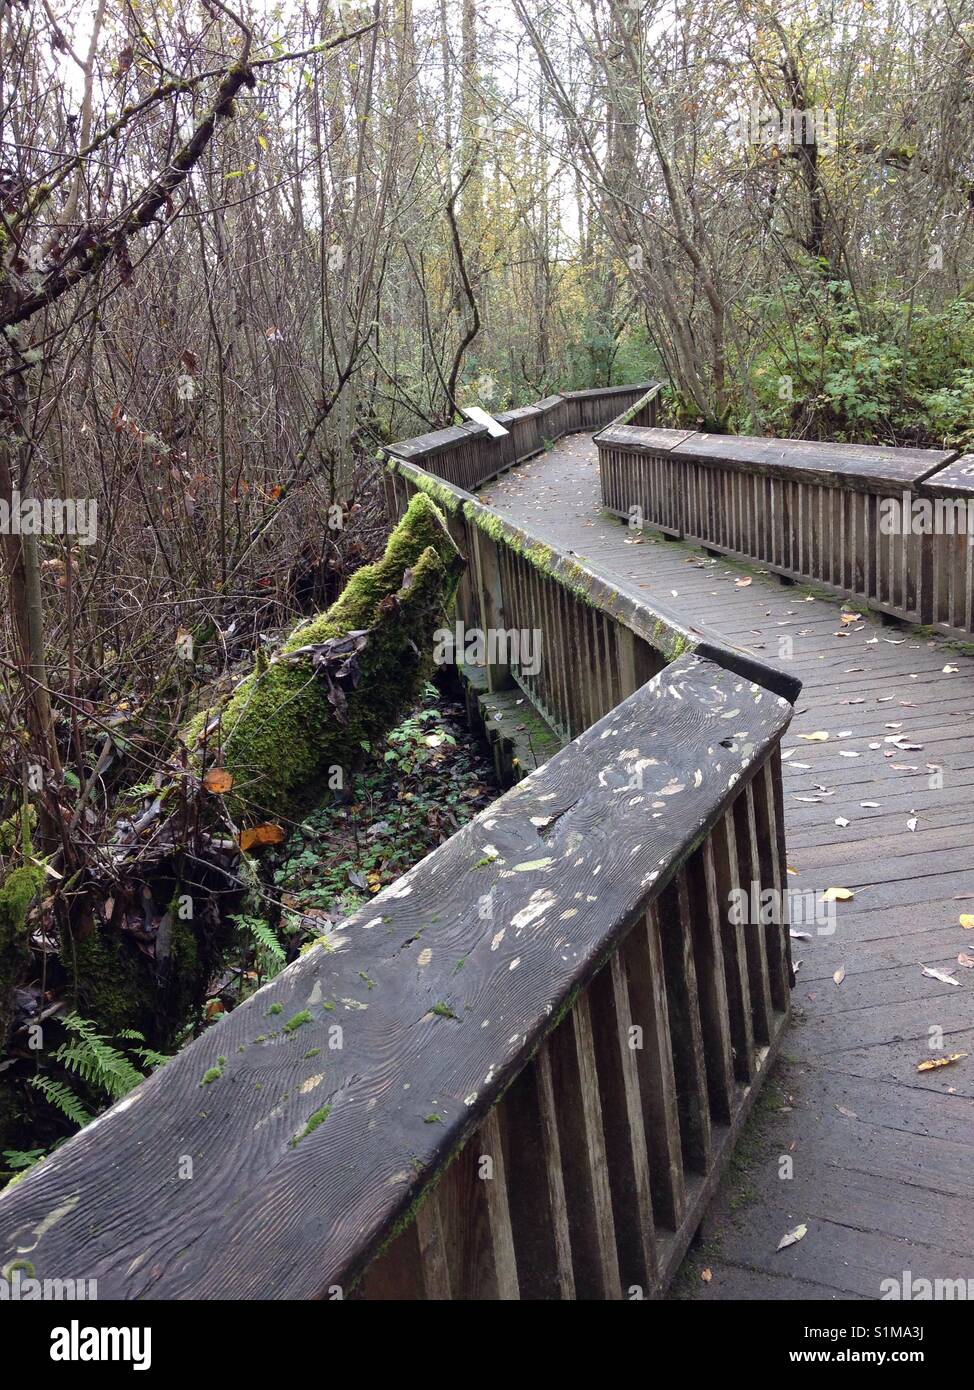 Nisqually Wildlife Preserve in Washington State, USA. Boardwalk through nature. Stock Photo